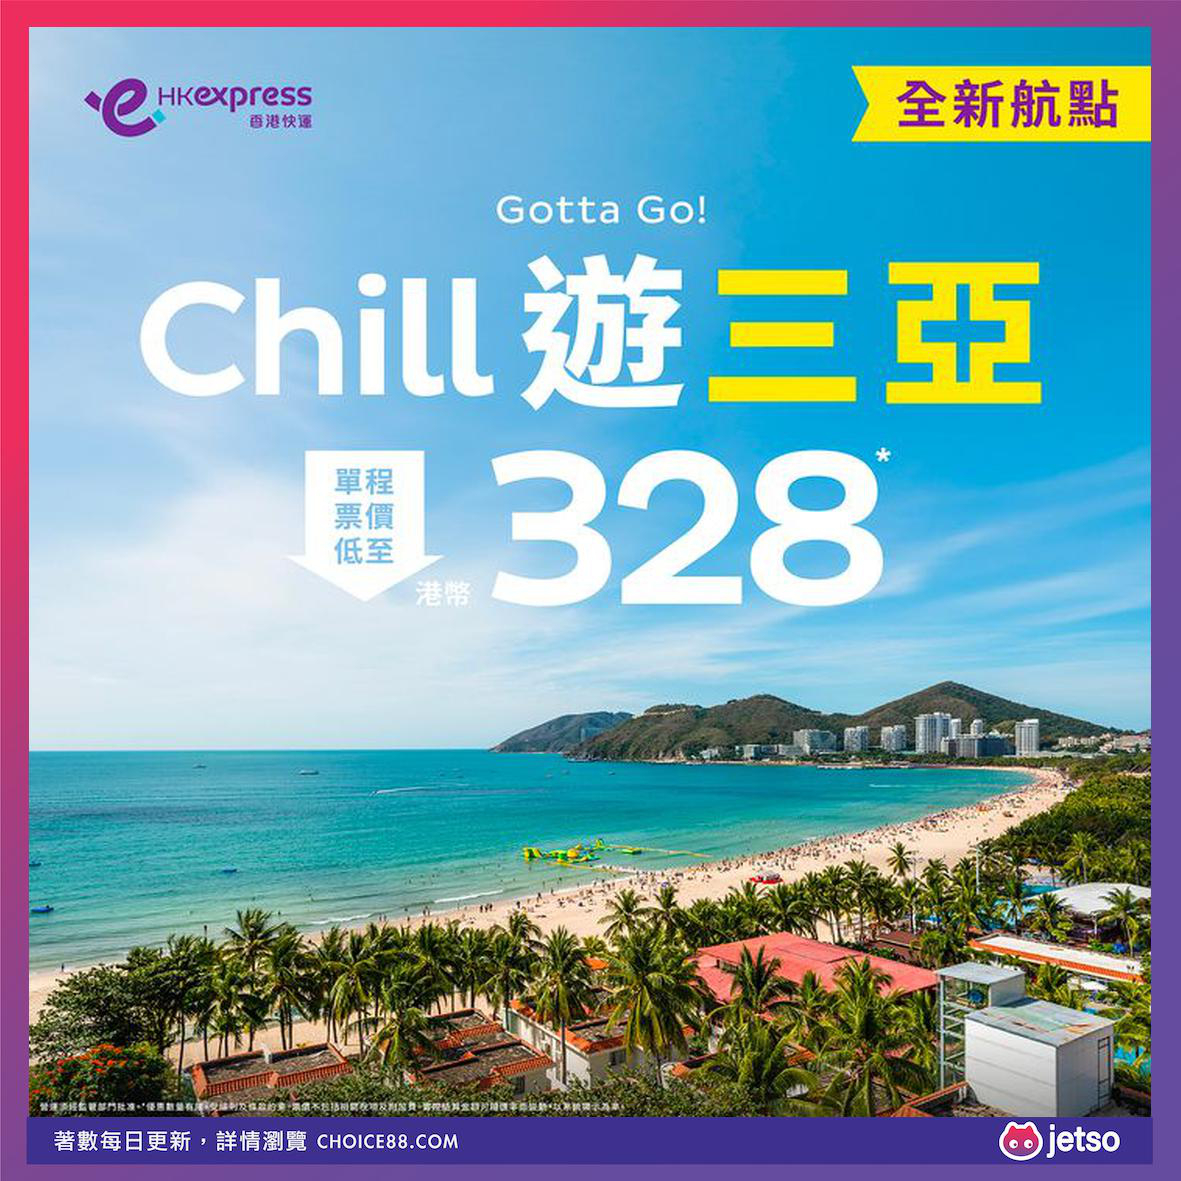 HK Express : [机票优惠]三亚特惠旅游套餐